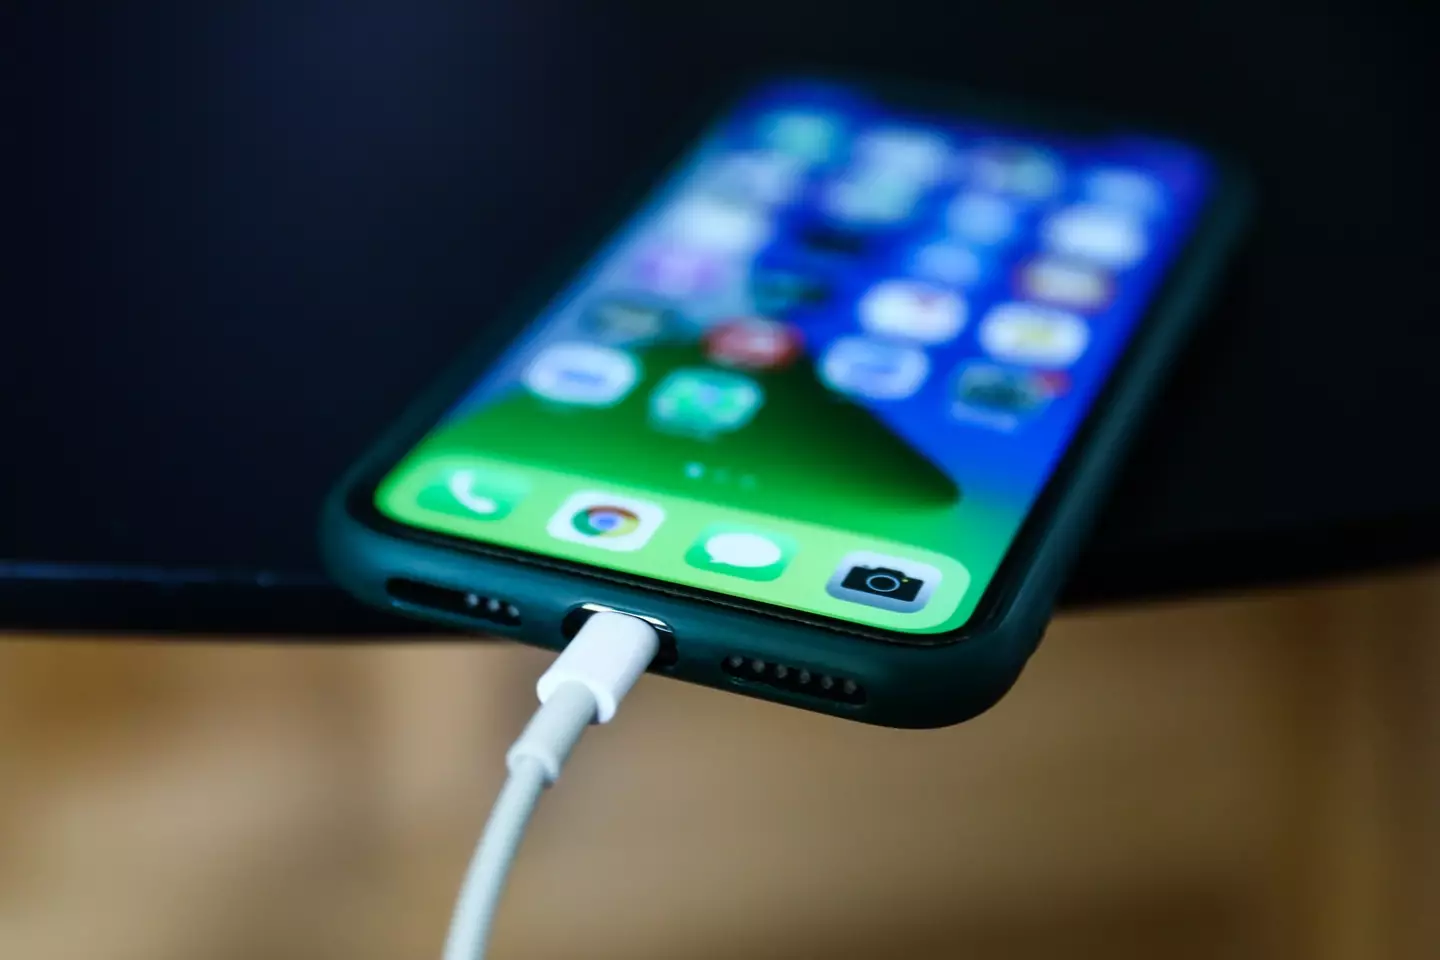 Apple says swiping apps closed actually depletes battery life. (Jakub Porzycki/NurPhoto via Getty Images)